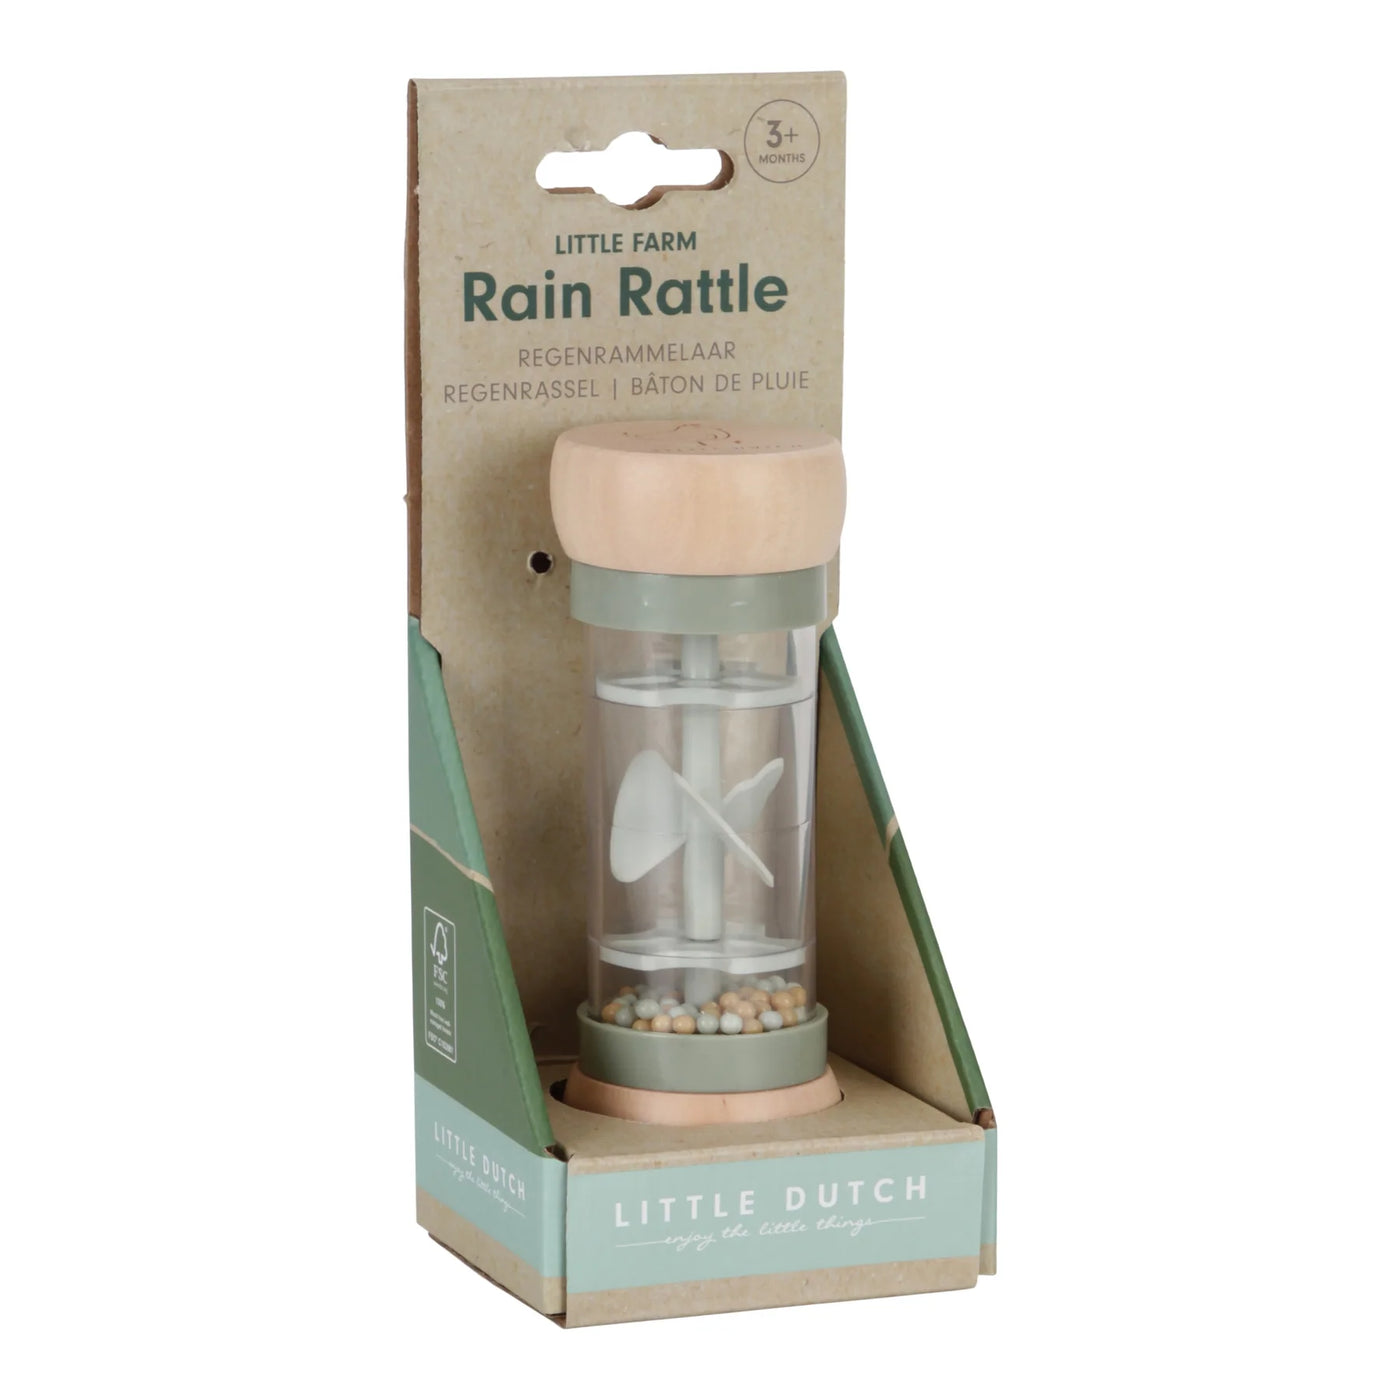 Little Dutch Rain Rattle | Little Farm